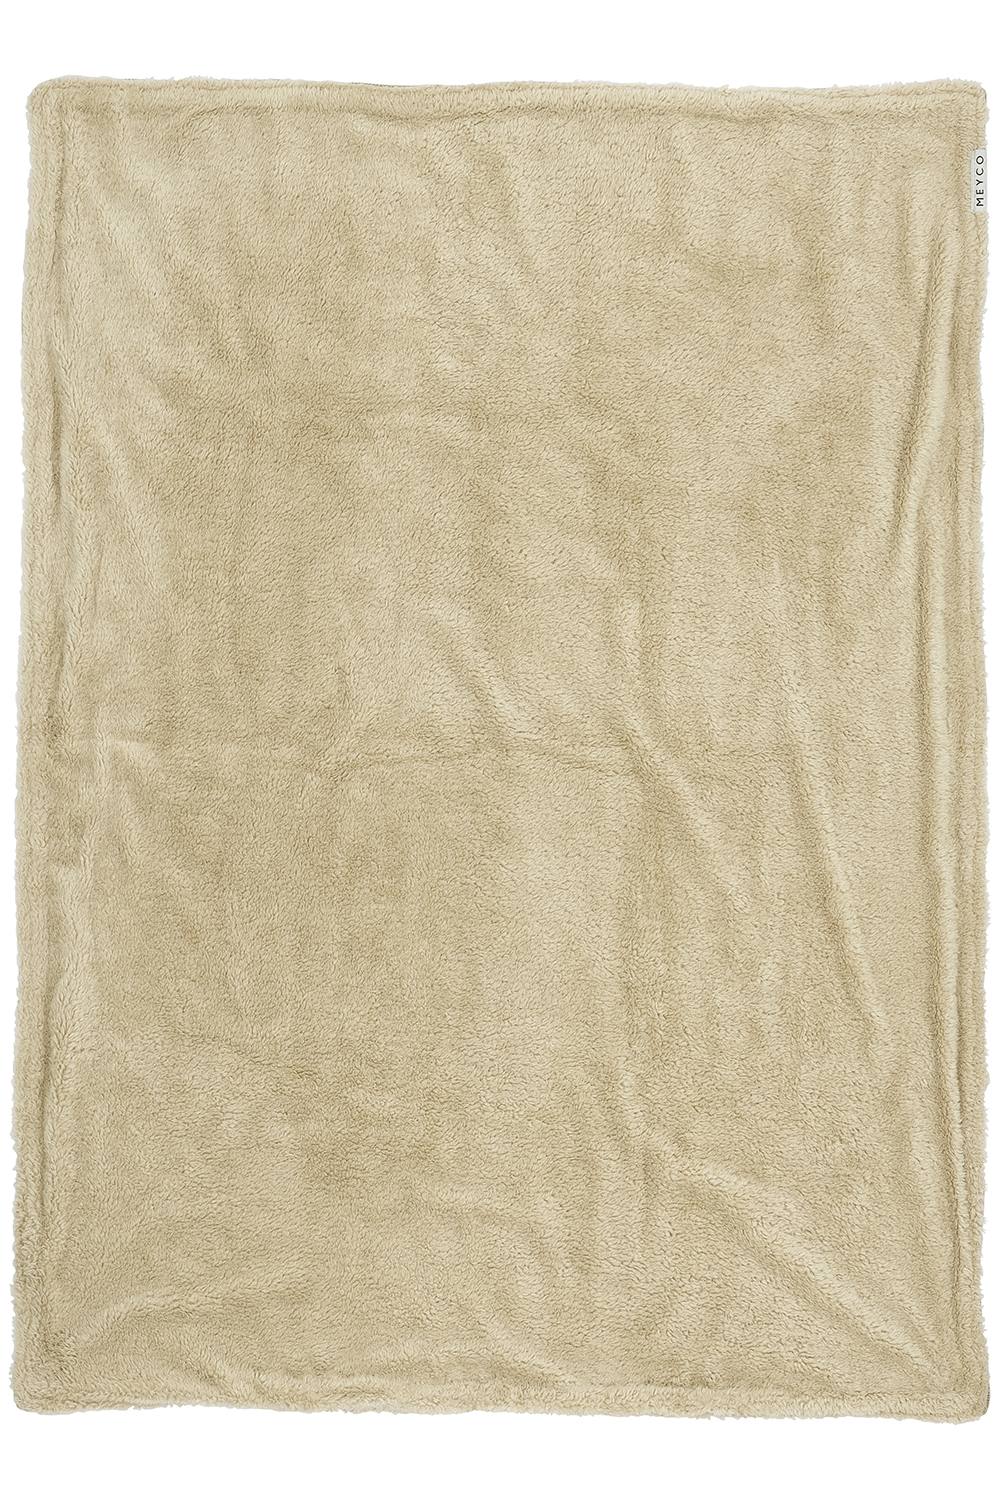 Ledikant deken Mini Knots teddy - sand - 100x150cm